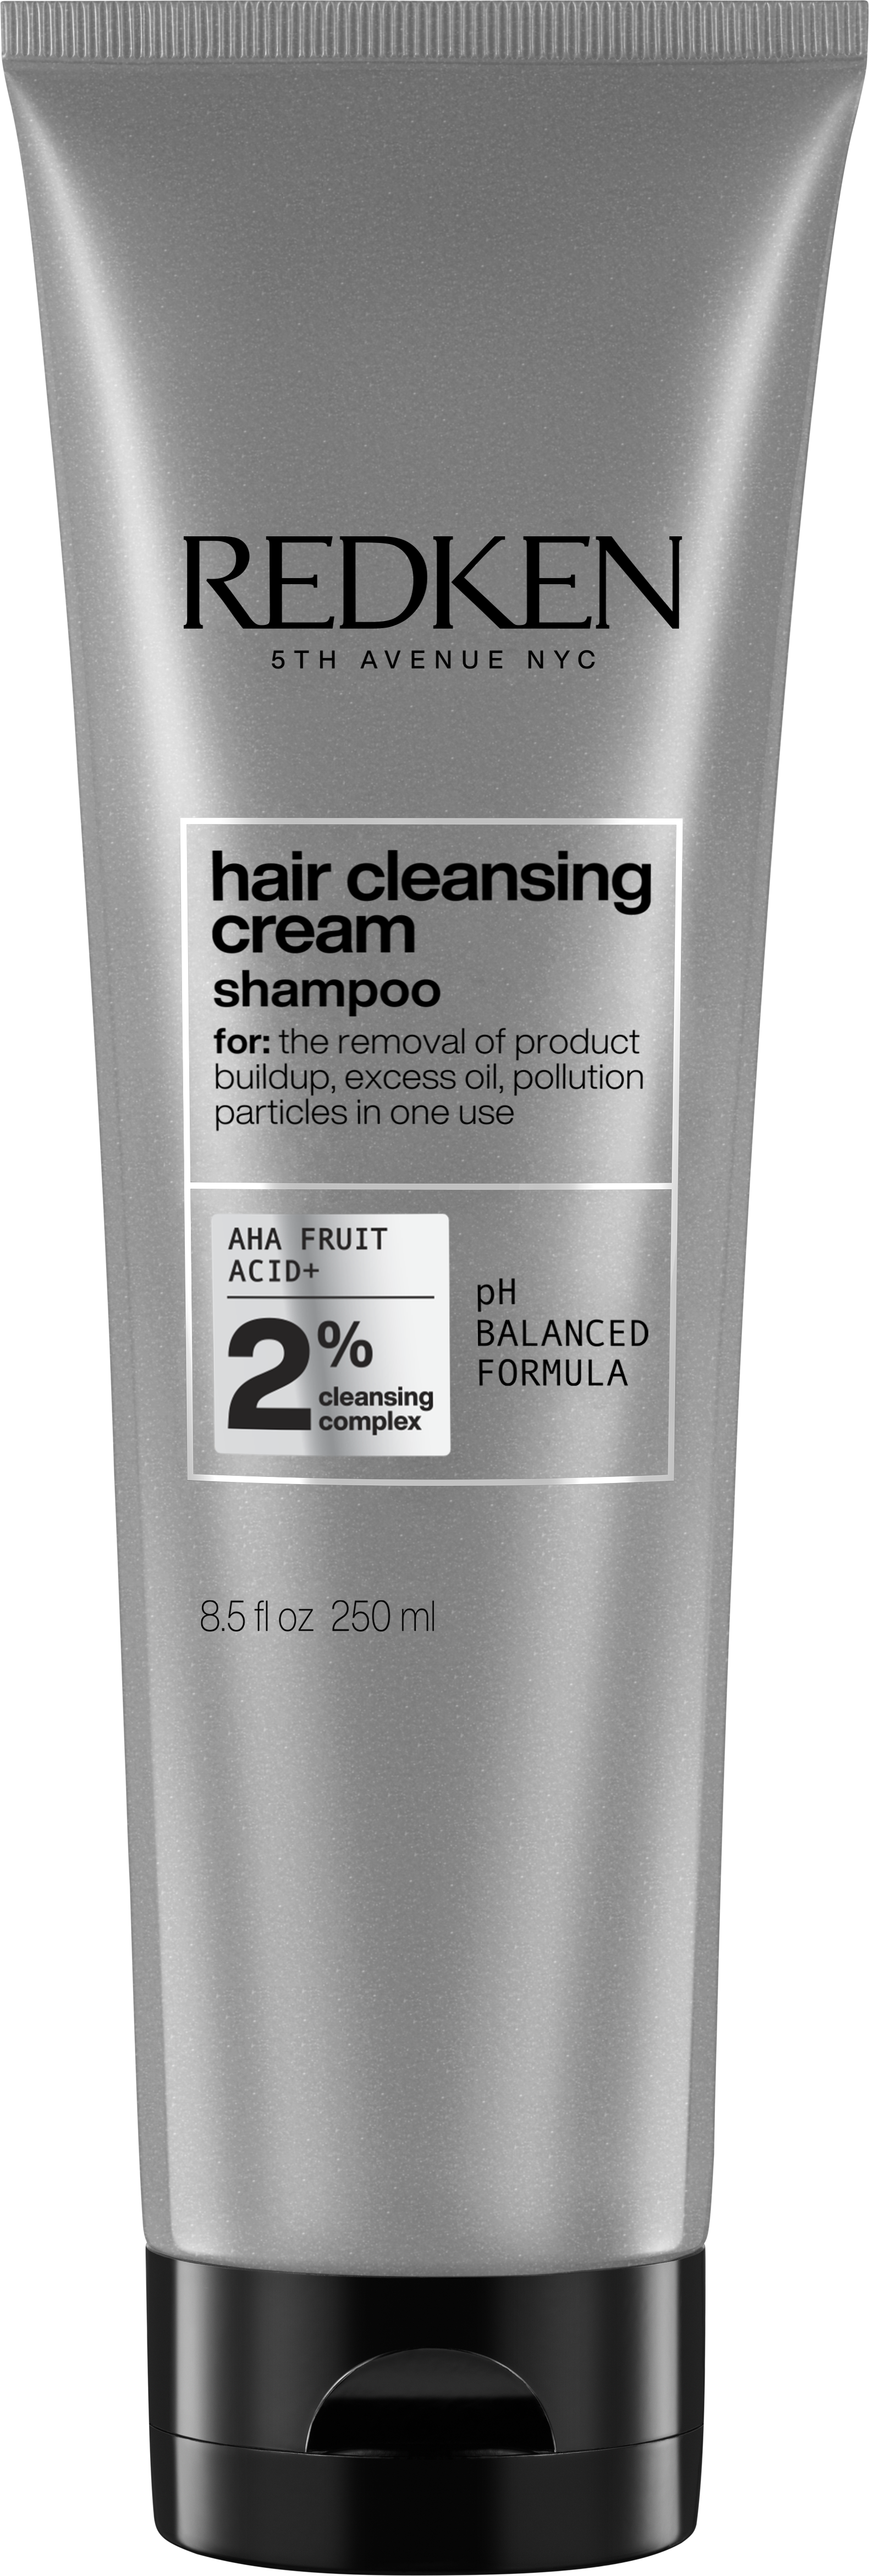 Redken Hair Cleansing Cream Shampoo  My Haircare  Beauty